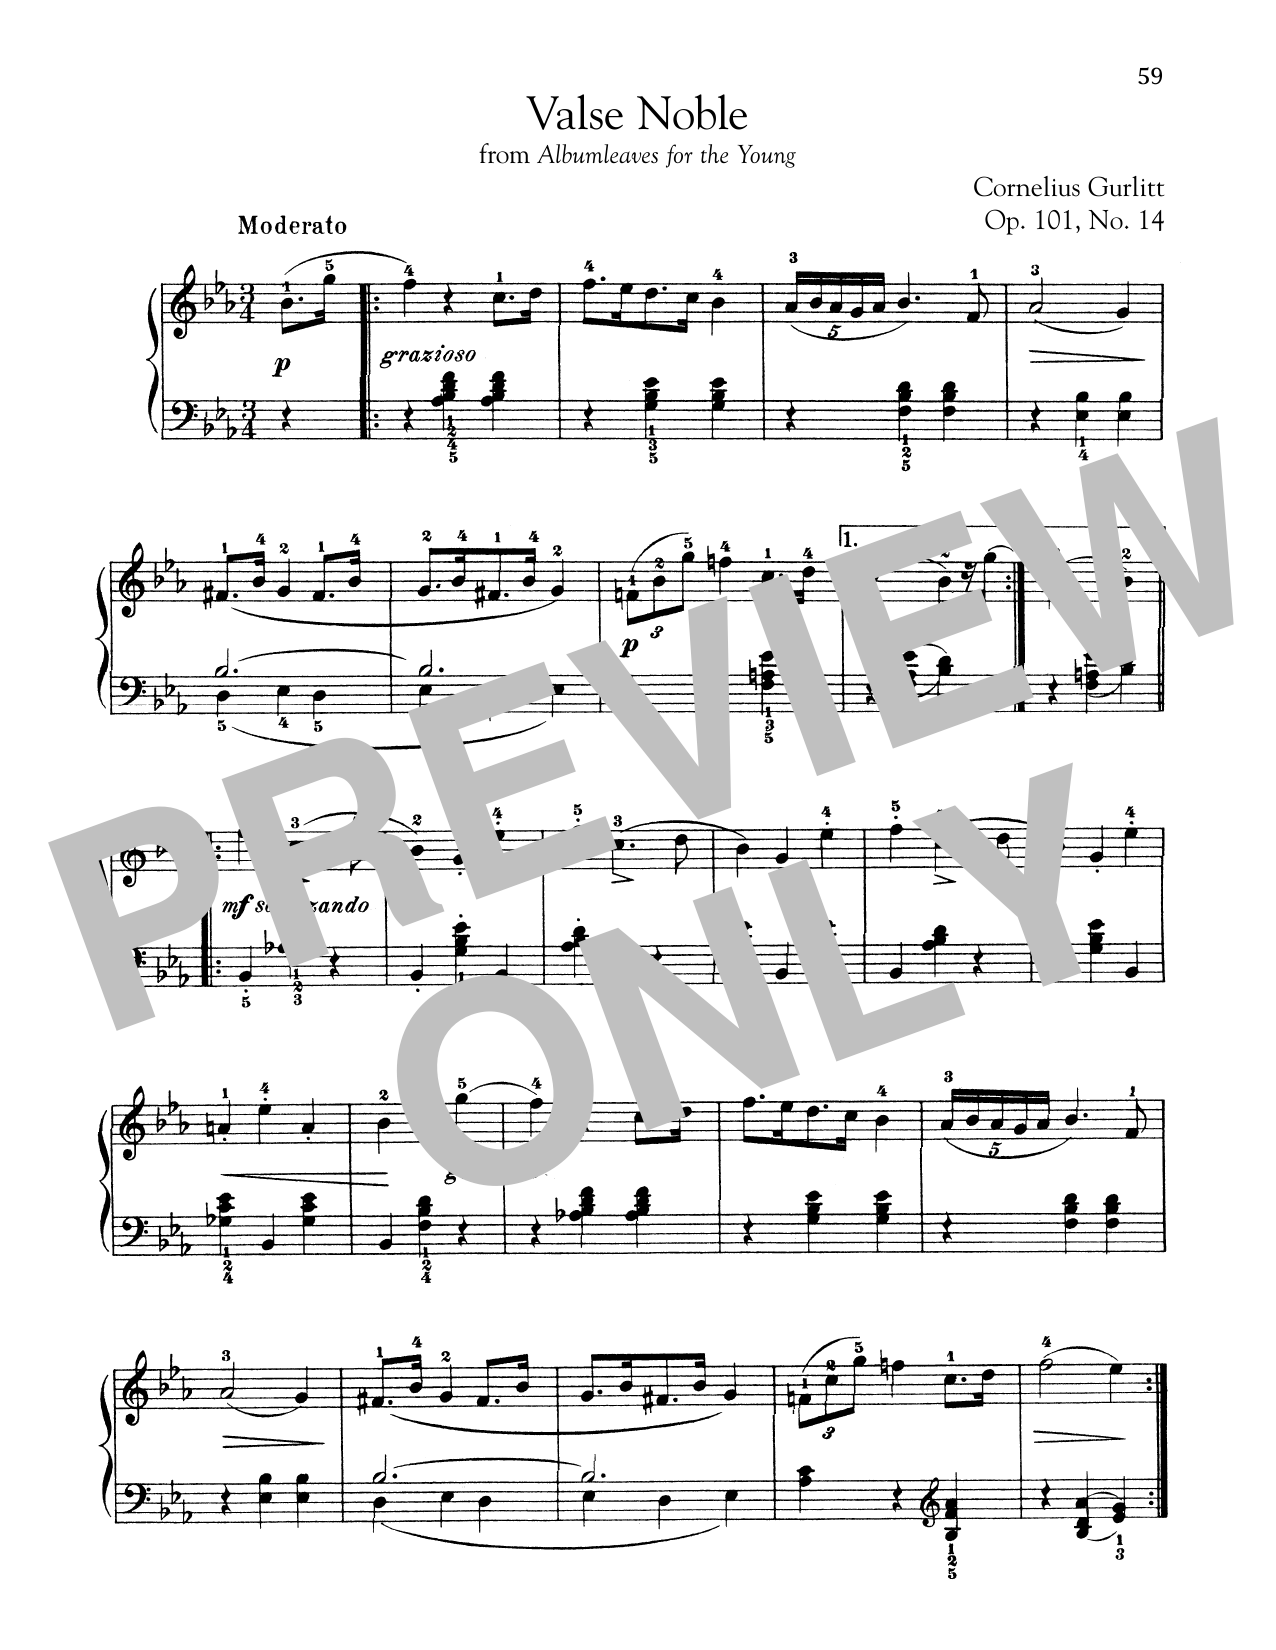 Cornelius Gurlitt Valse Noble, Op. 101, No. 14 Sheet Music Notes & Chords for Piano - Download or Print PDF